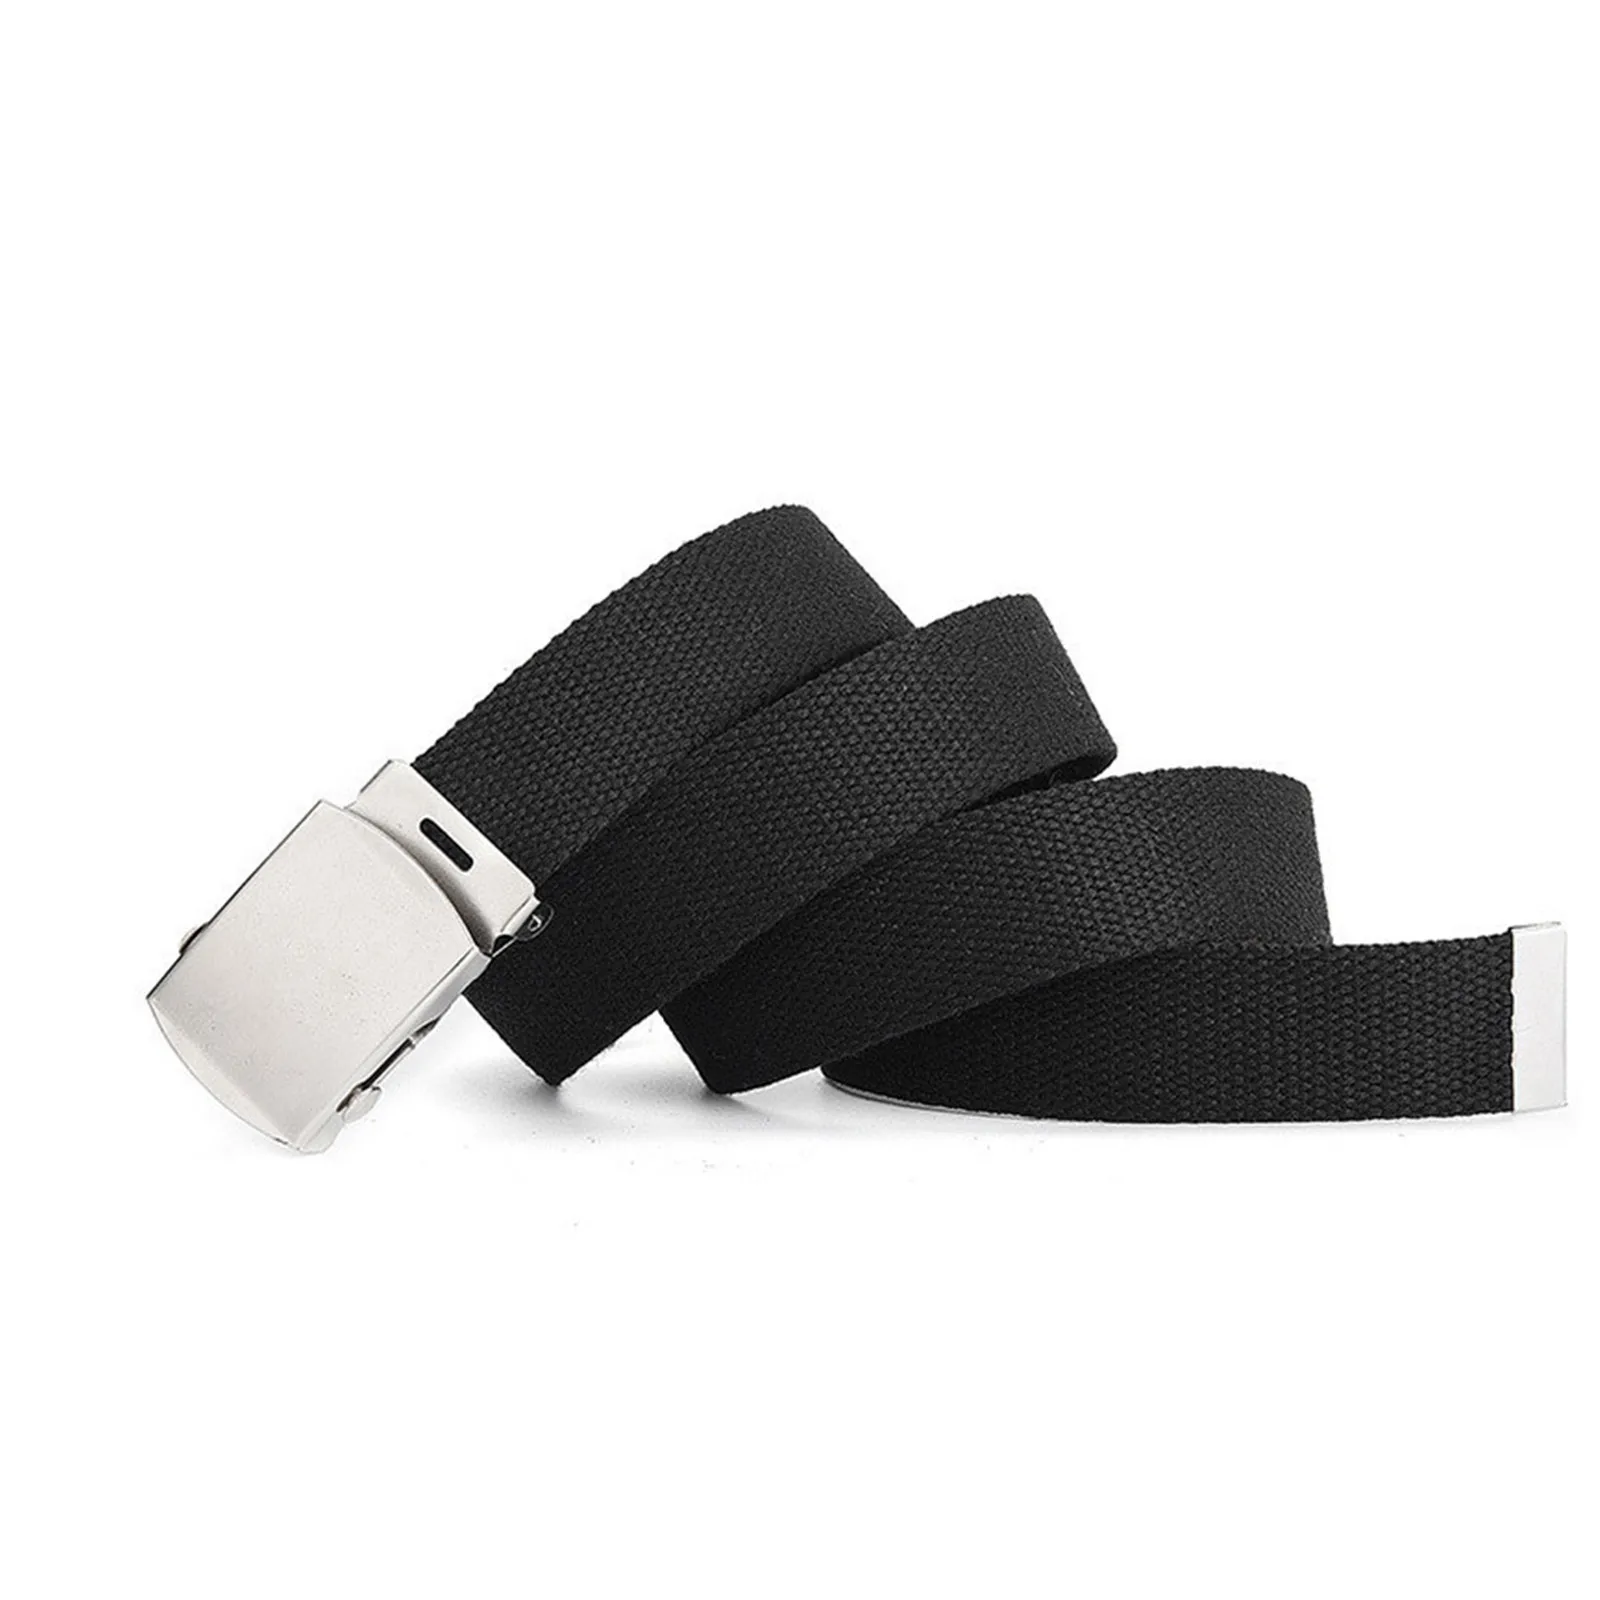 High Quality Canvas Belt Unisex Luxury Strap Tactical Military Canvas Waistband Outdoor Training Belt Metal Buckle Belts Black belts